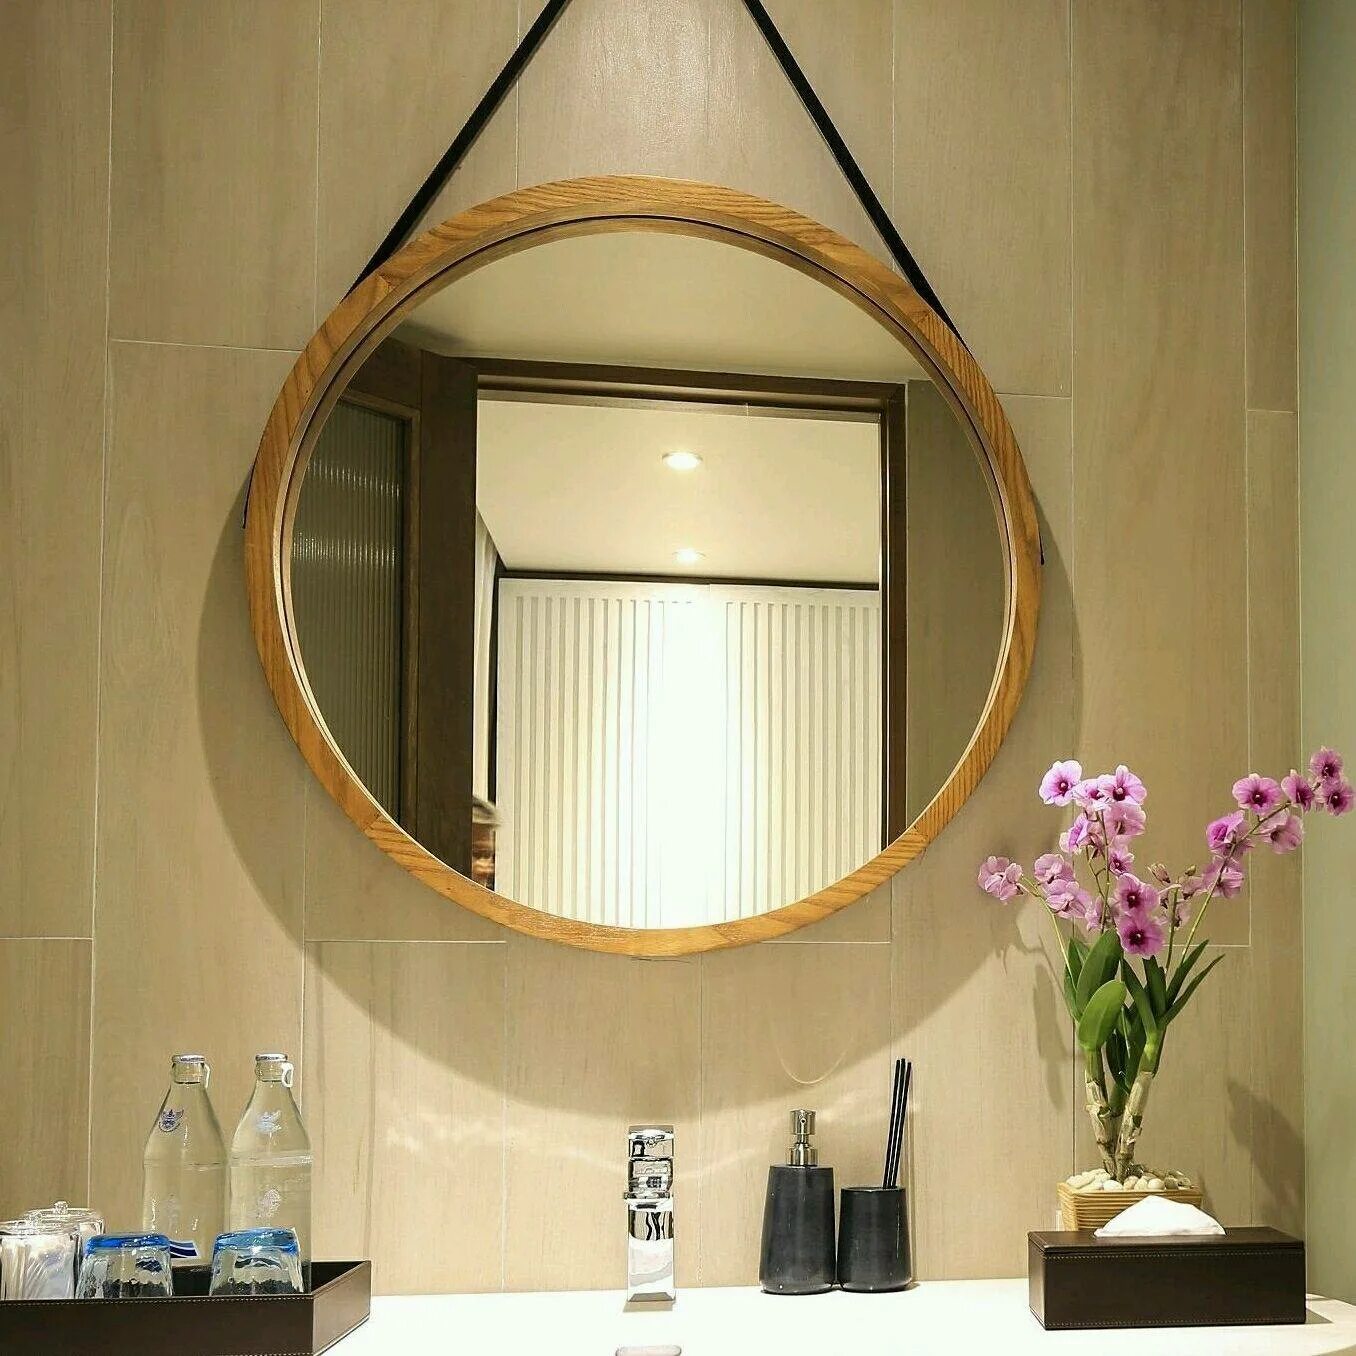 Подвесное зеркало для ванной. Зеркало Umbra Dima 17х28. Etna зеркало на ремне круглое 600*600. Круглое зеркало в ванную. Круглое зеркало в ванной.